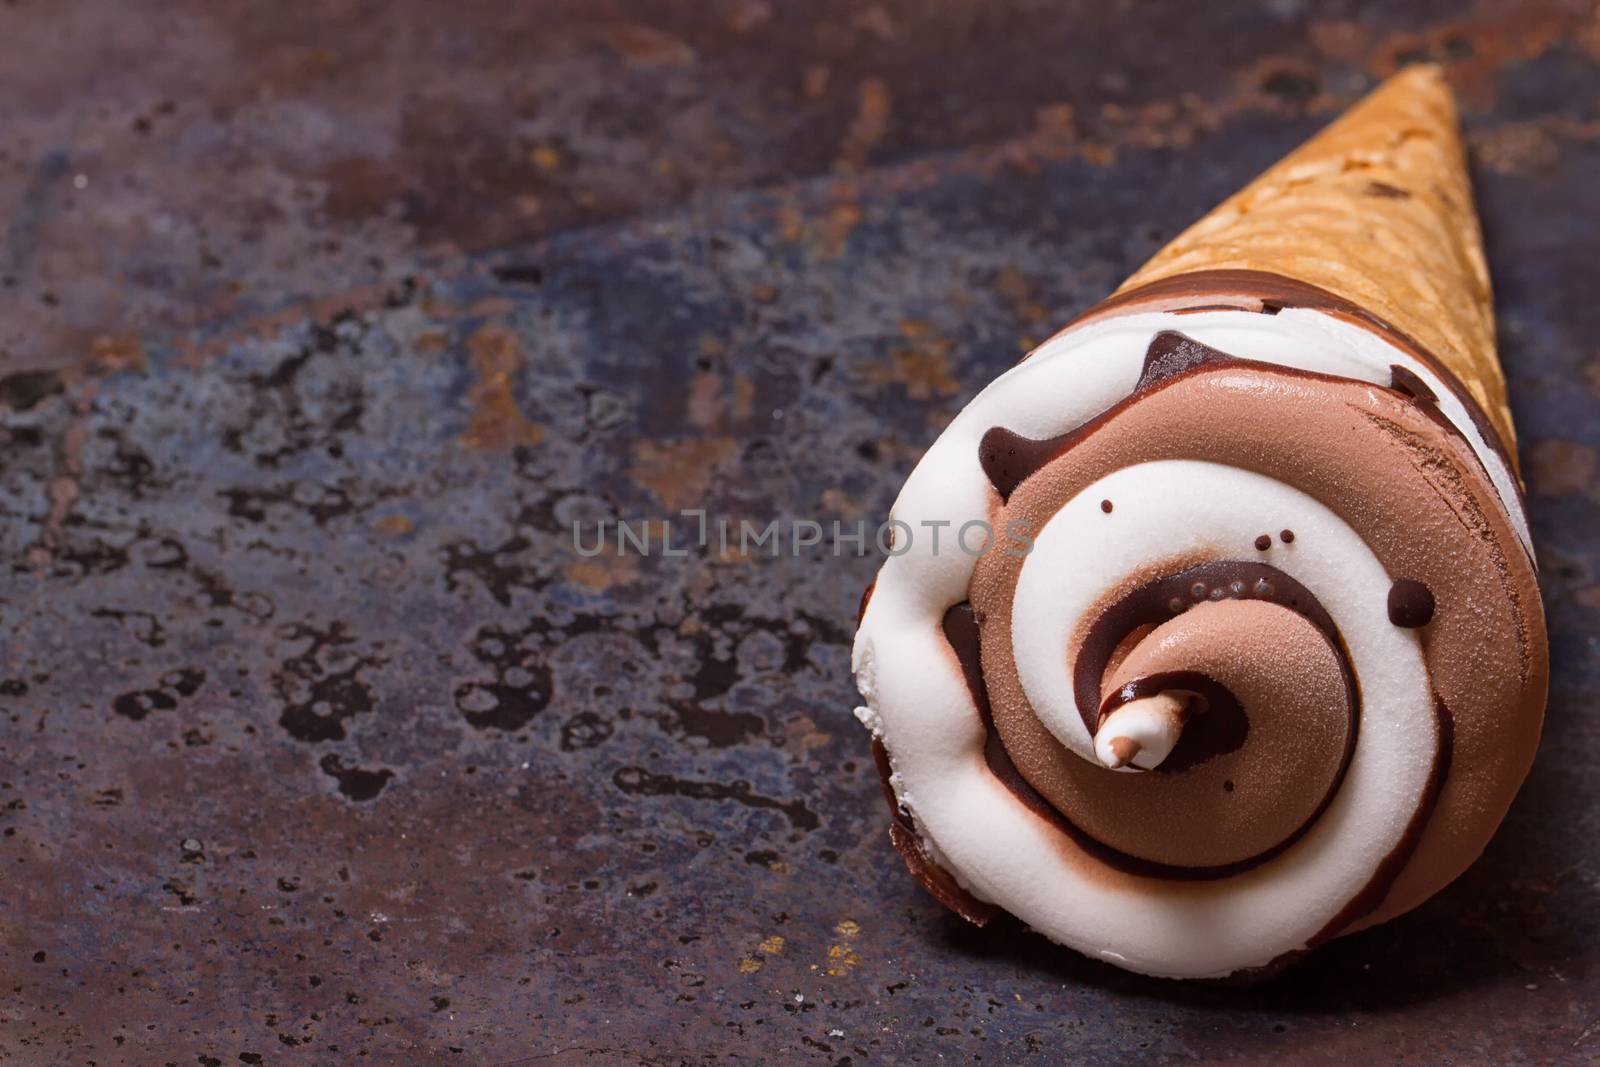 Vanilla ice cream cone with chocolate by victosha